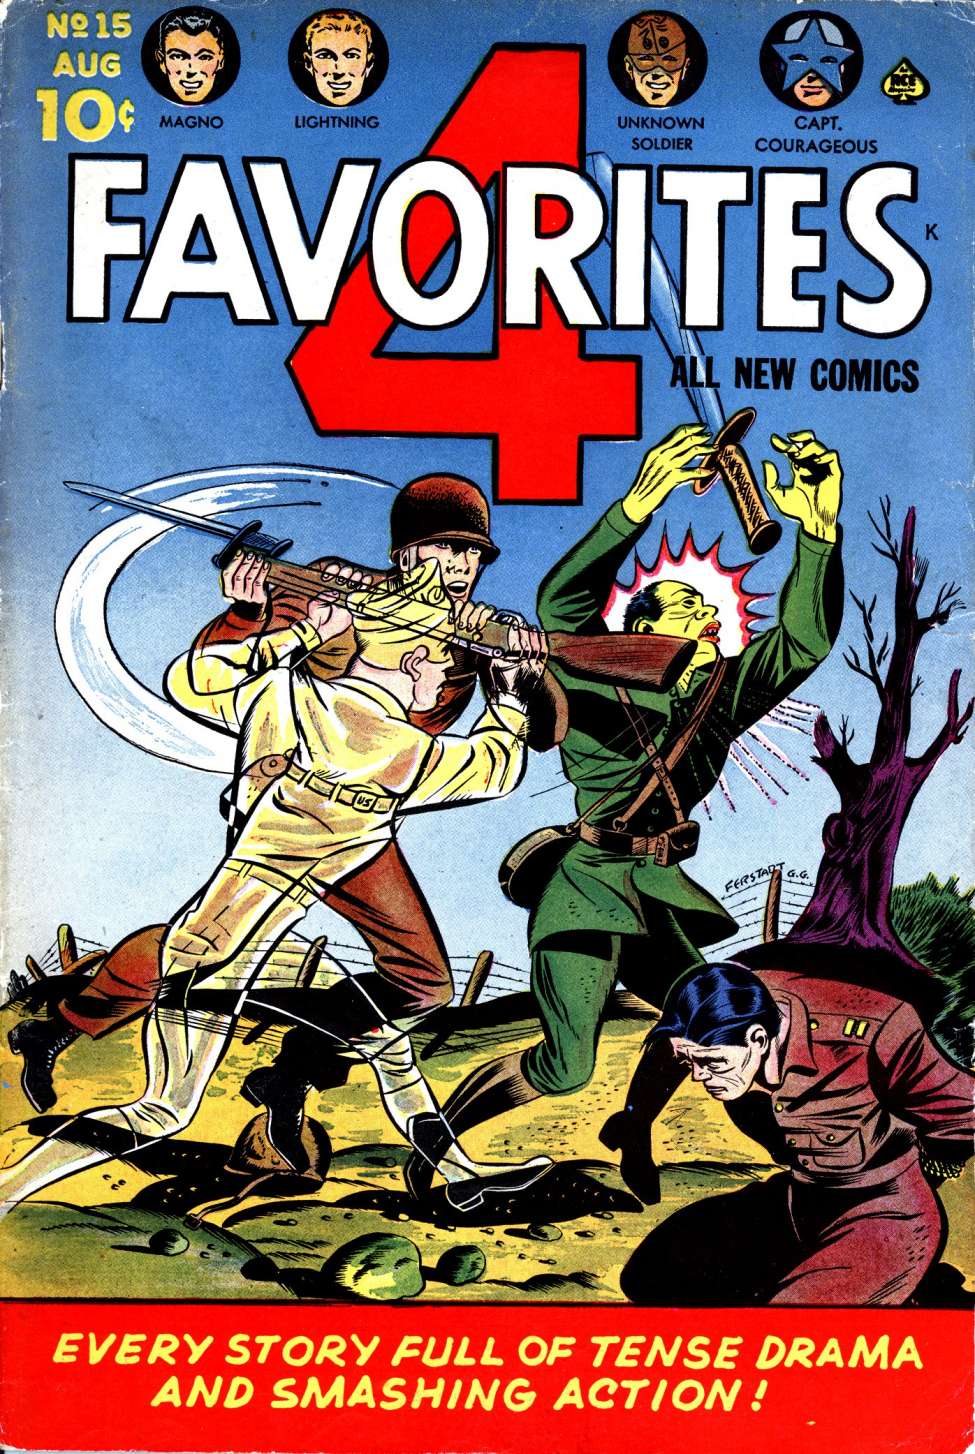 Comic Book Cover For Four Favorites 15 (alt) - Version 2